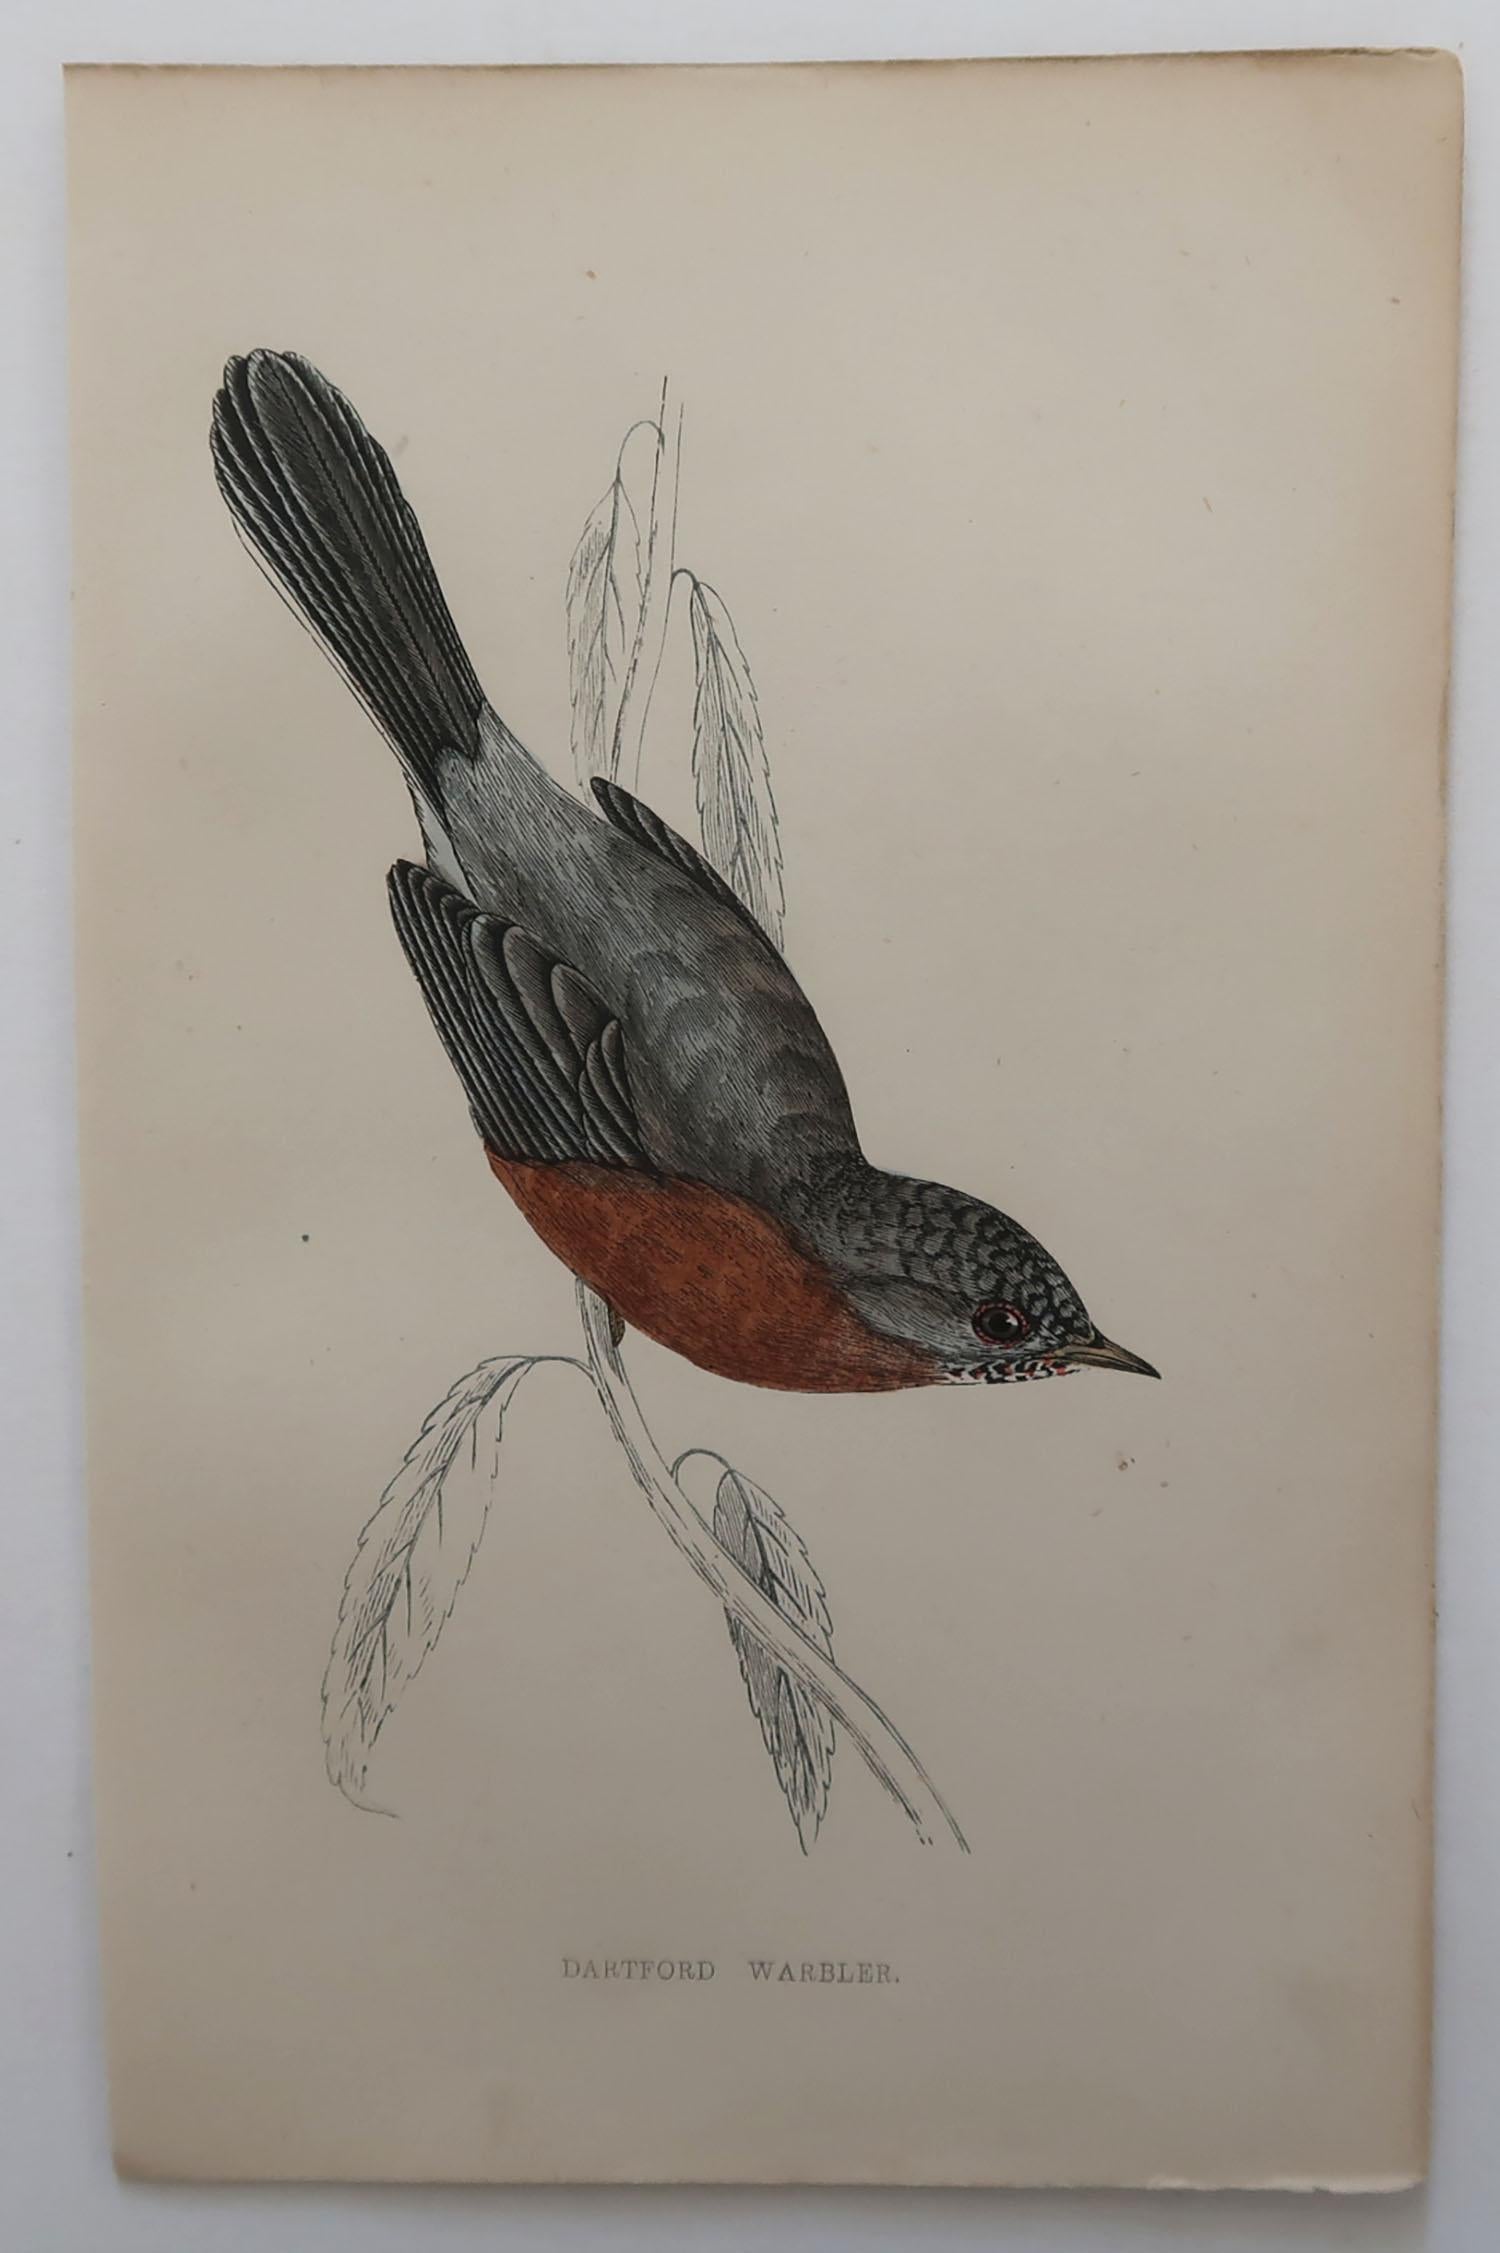 Folk Art Original Antique Bird Print, the Dartford Warbler, circa 1870